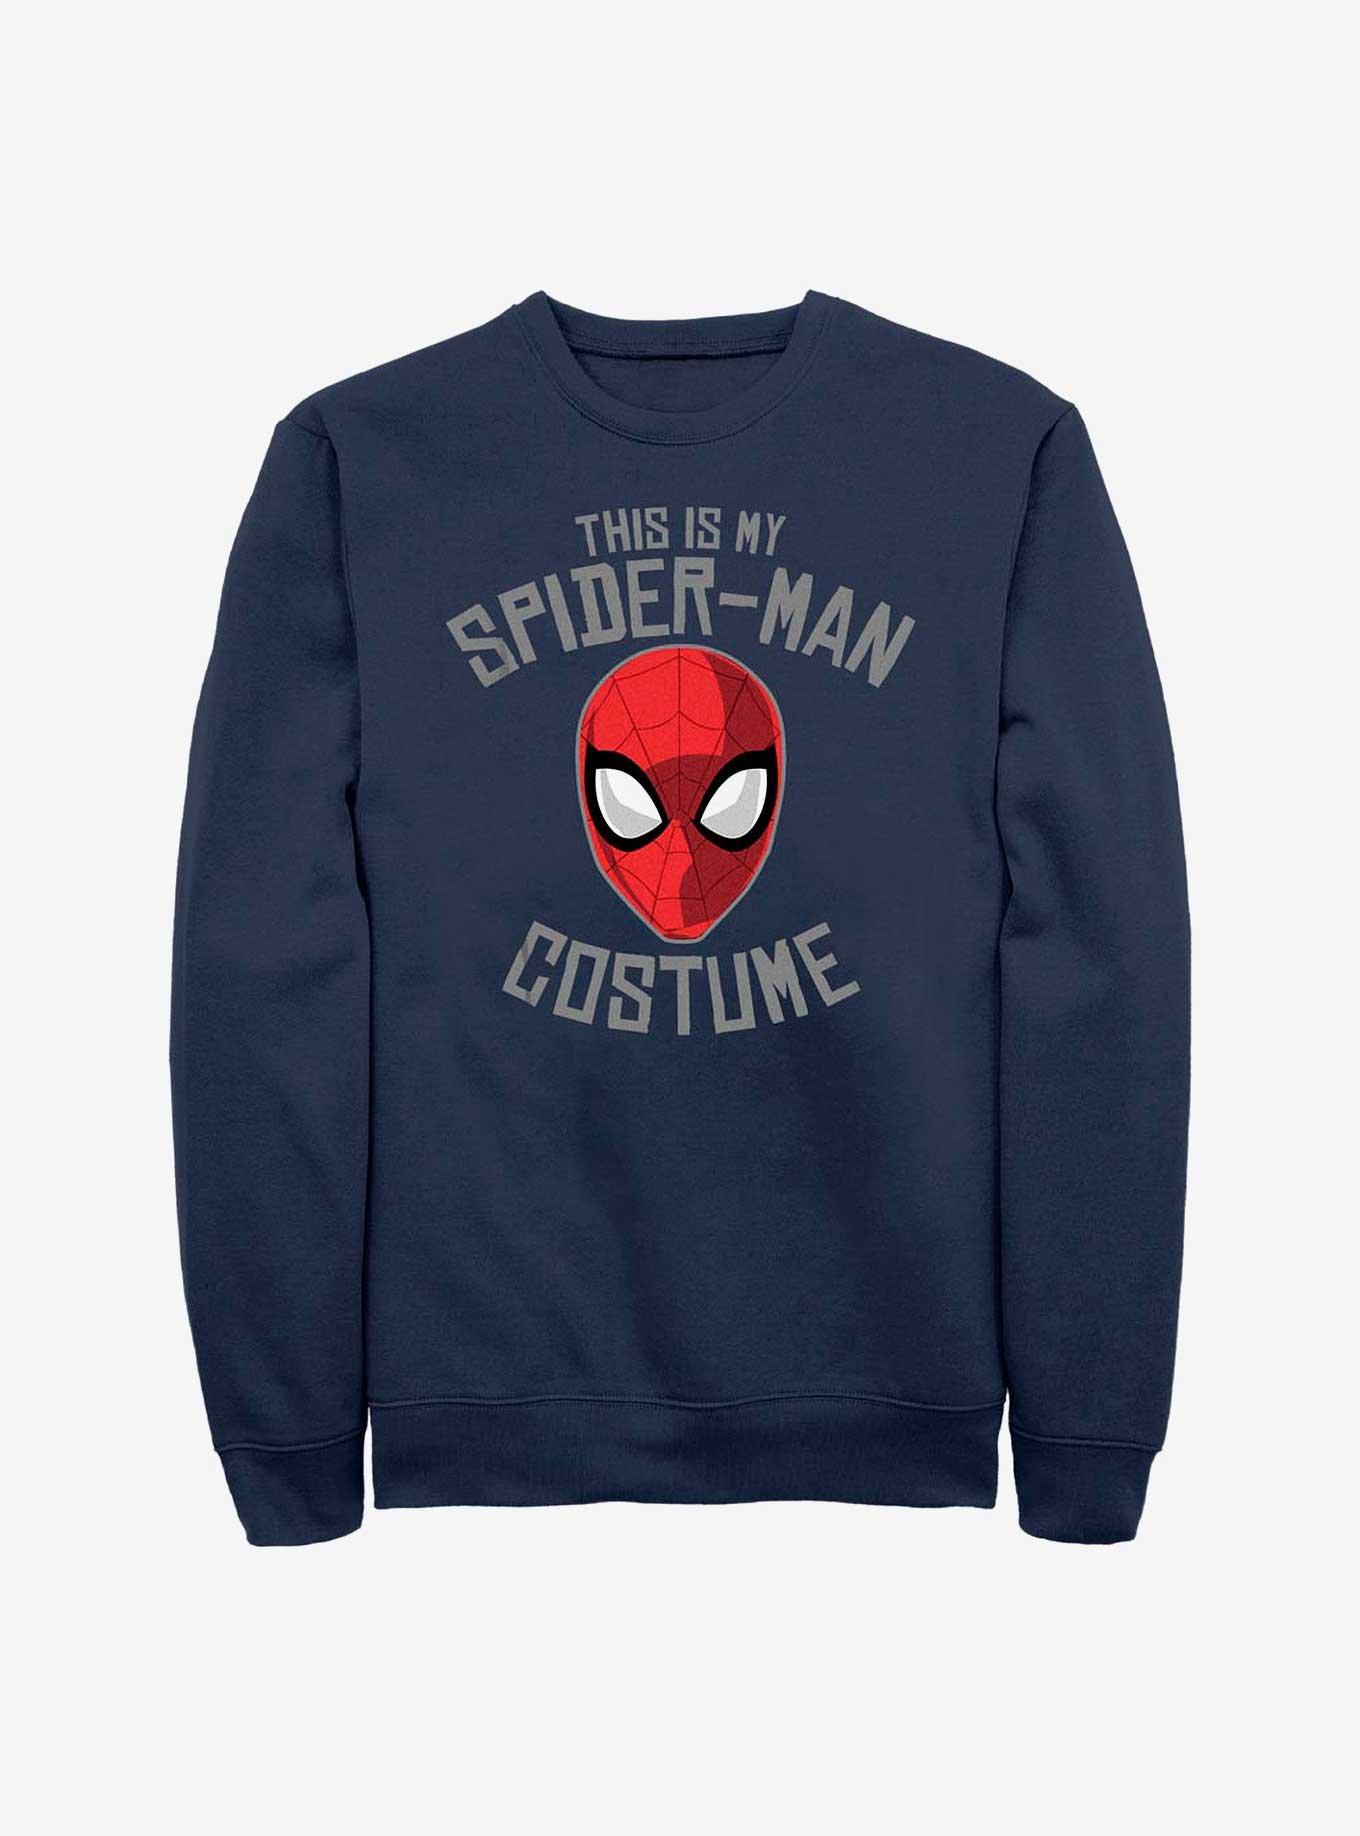 Marvel Spider-Man This Is My Costume Sweatshirt